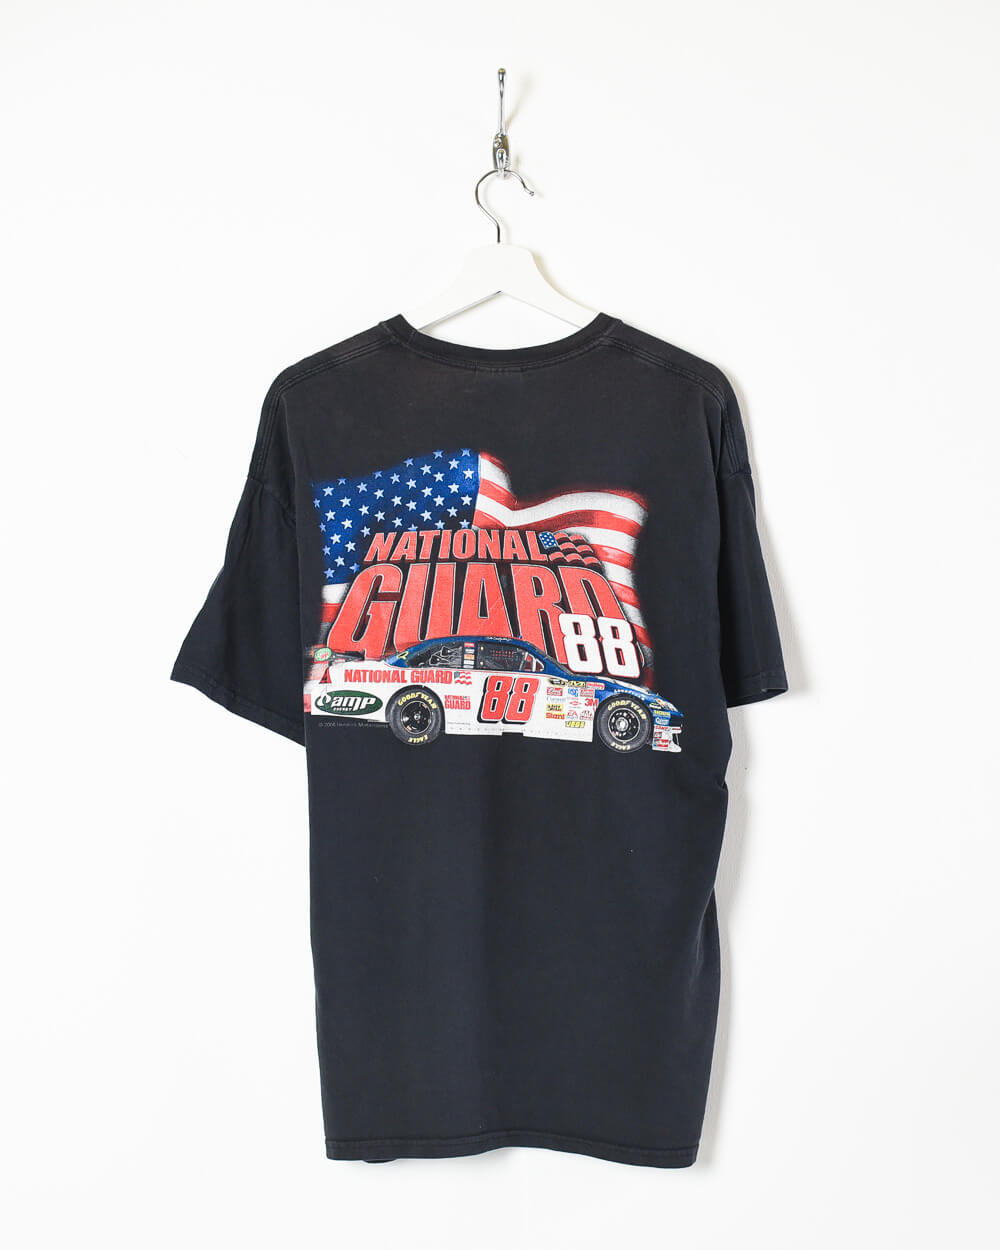 Black Hanes Nascar Dale Earnhardt Jr 88 T-Shirt - X-Large